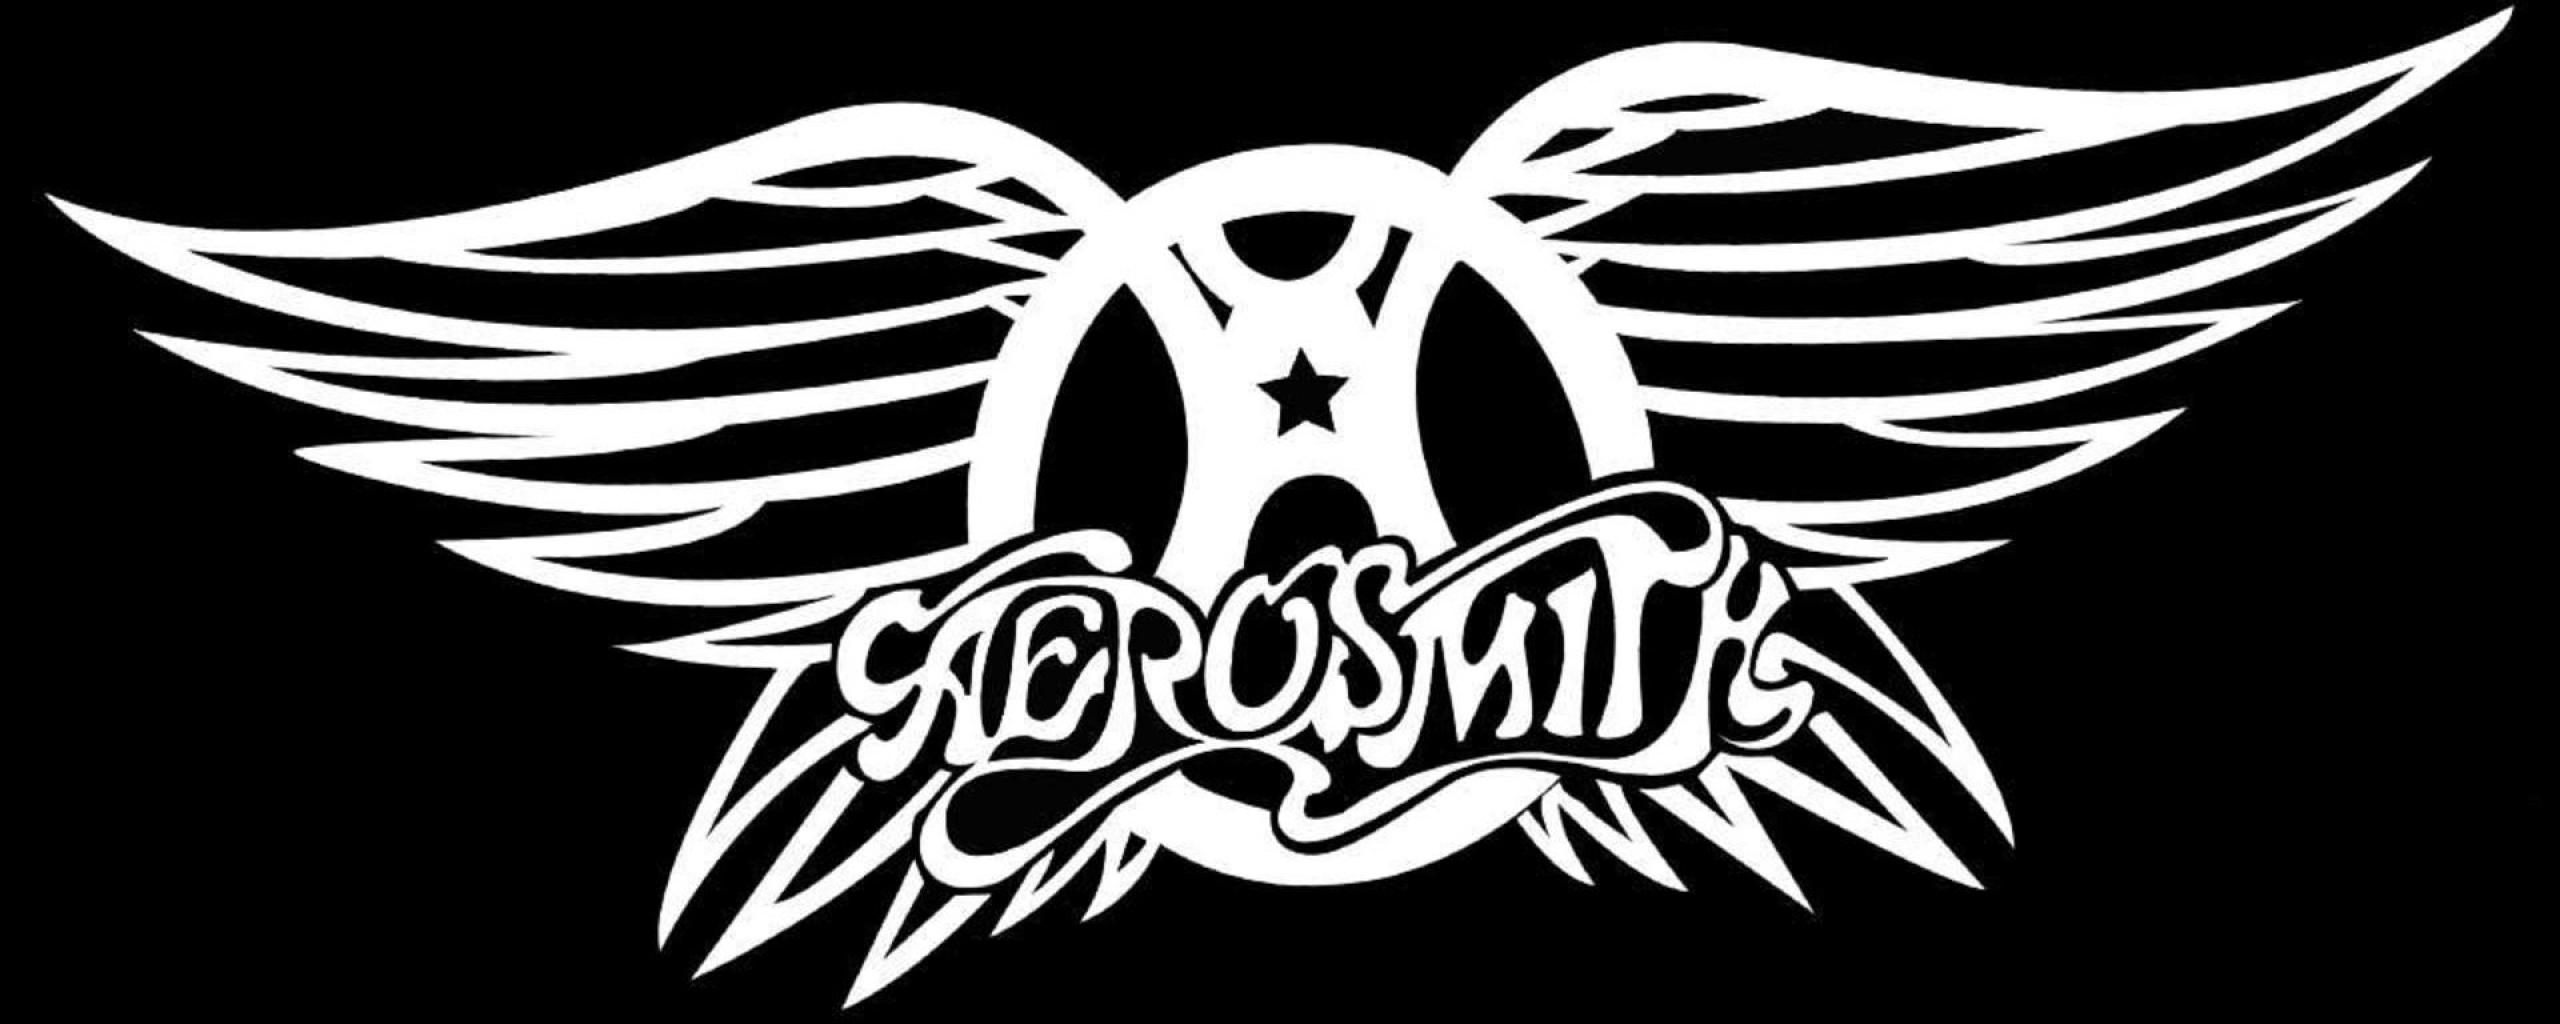 Aerosmith Desktop Background